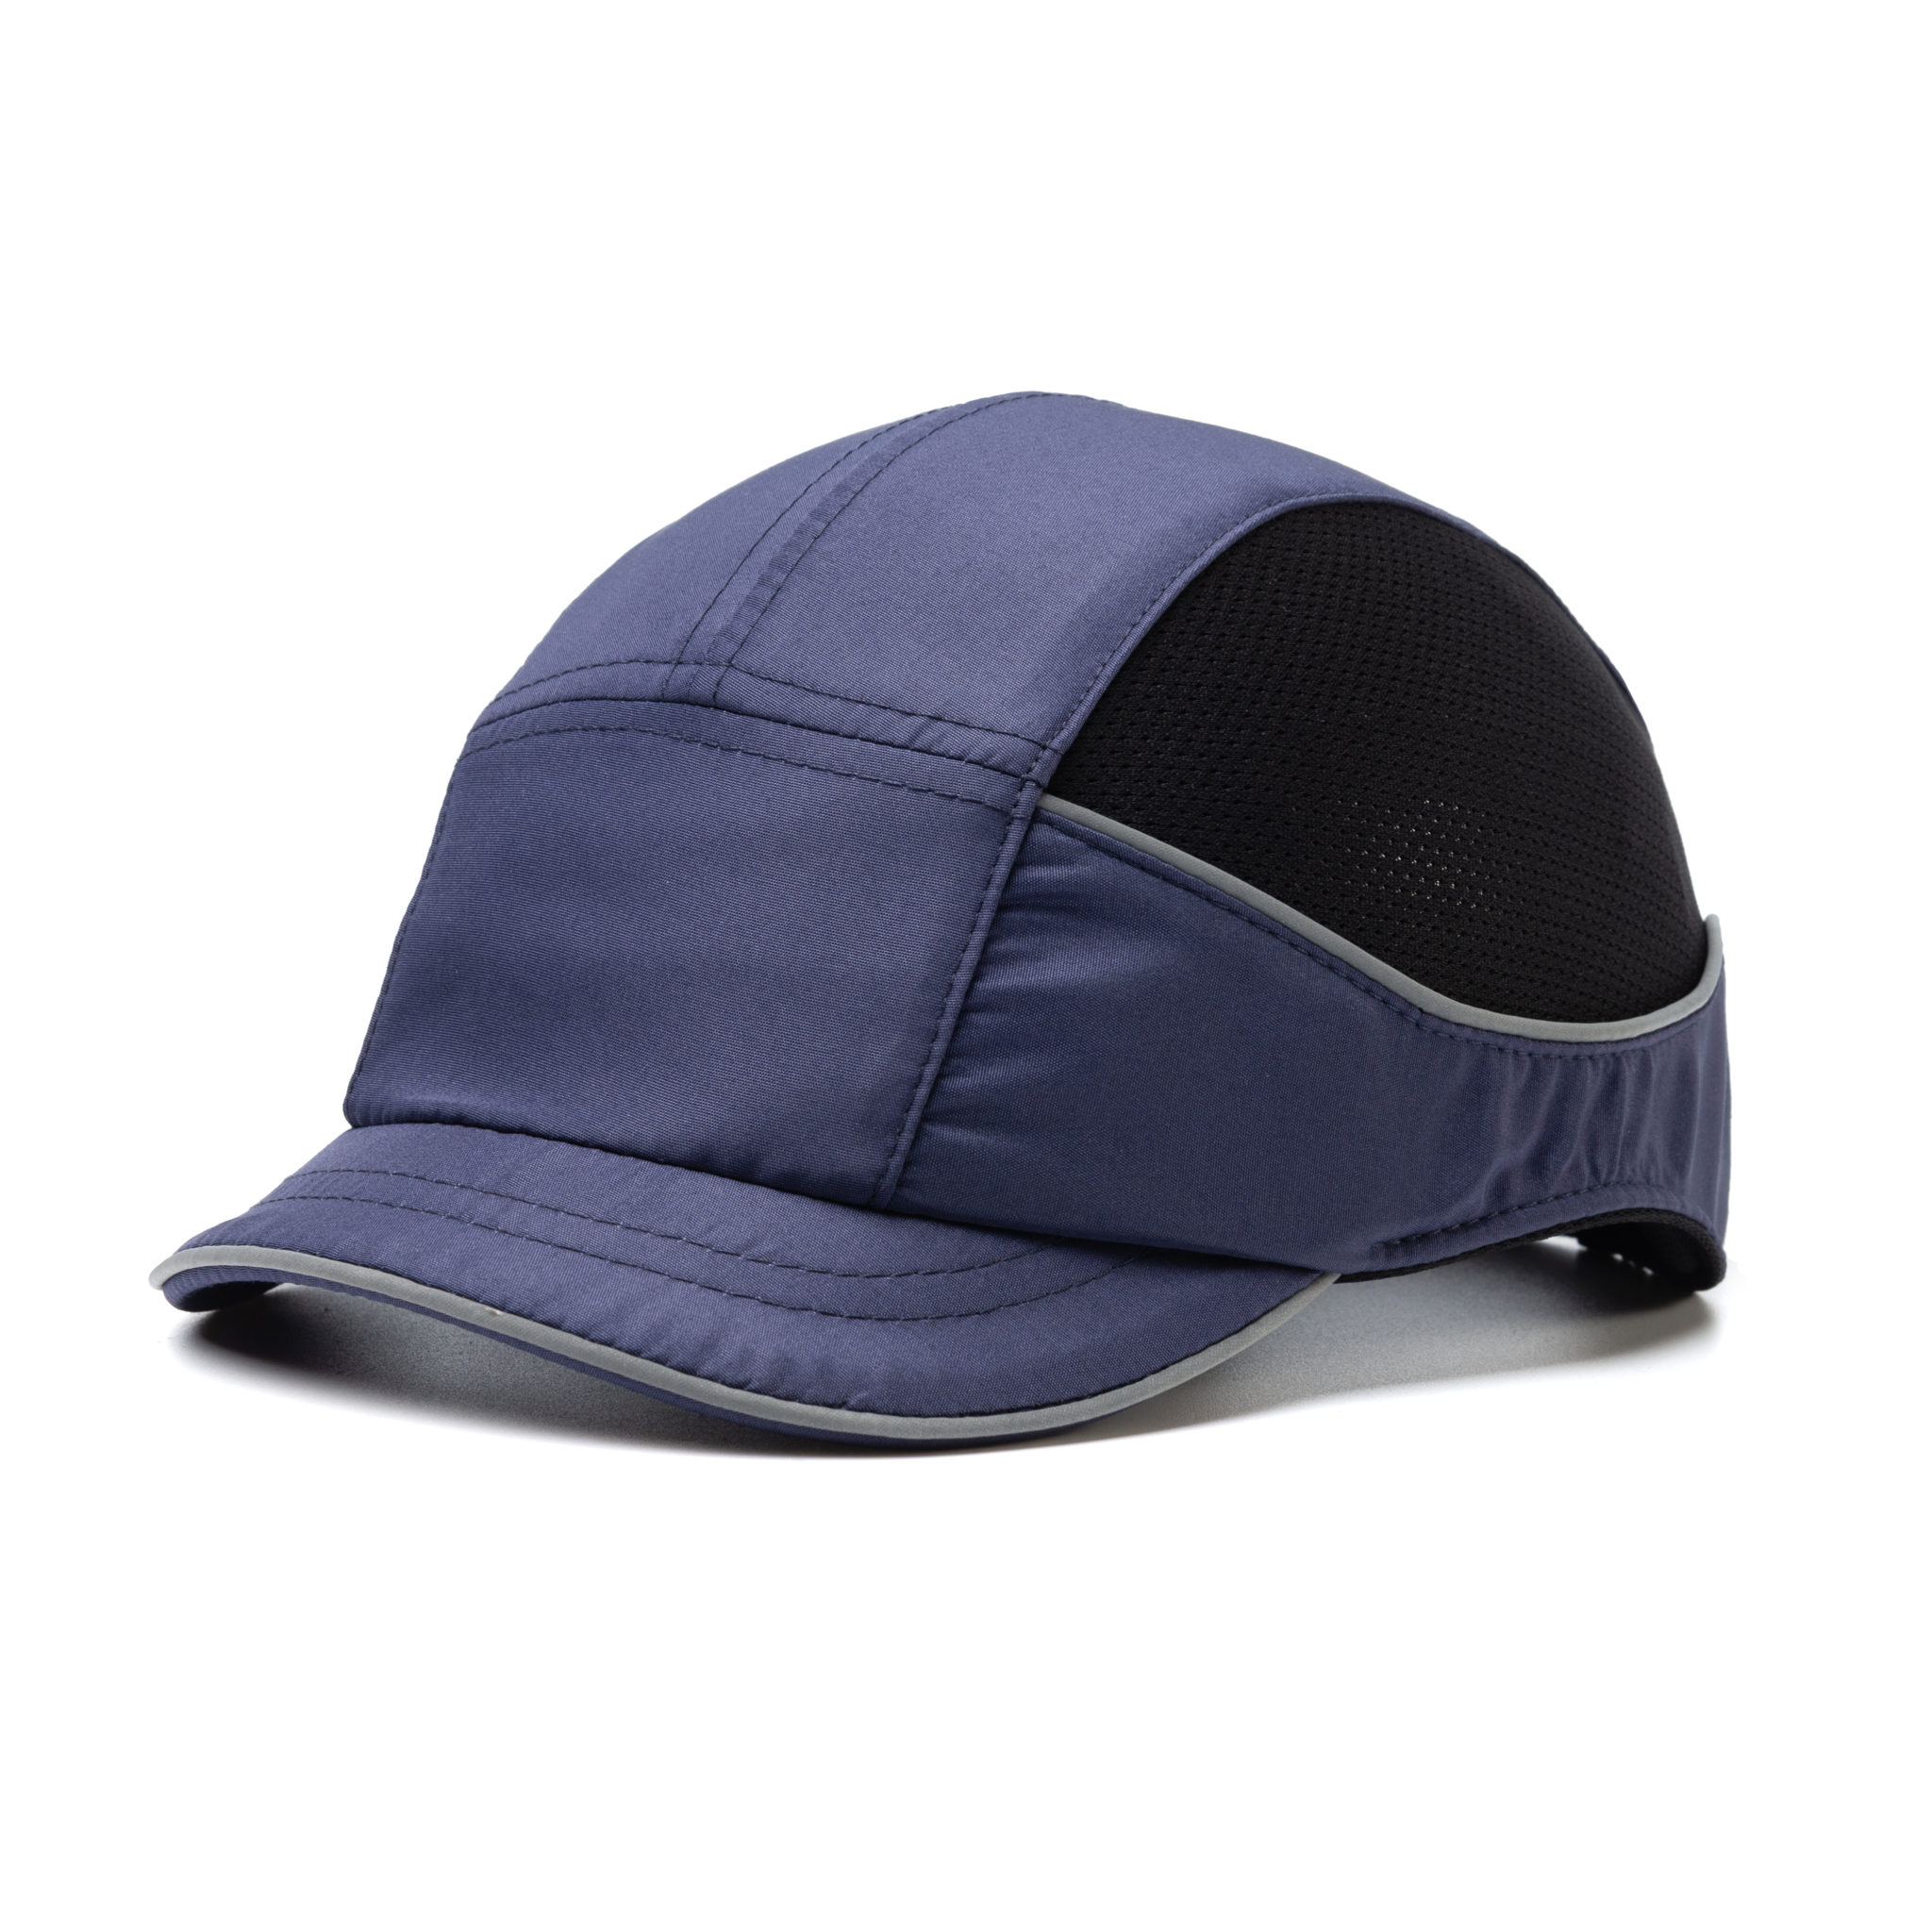 Bump caps hats helmets short bill microfibre polyester head protection